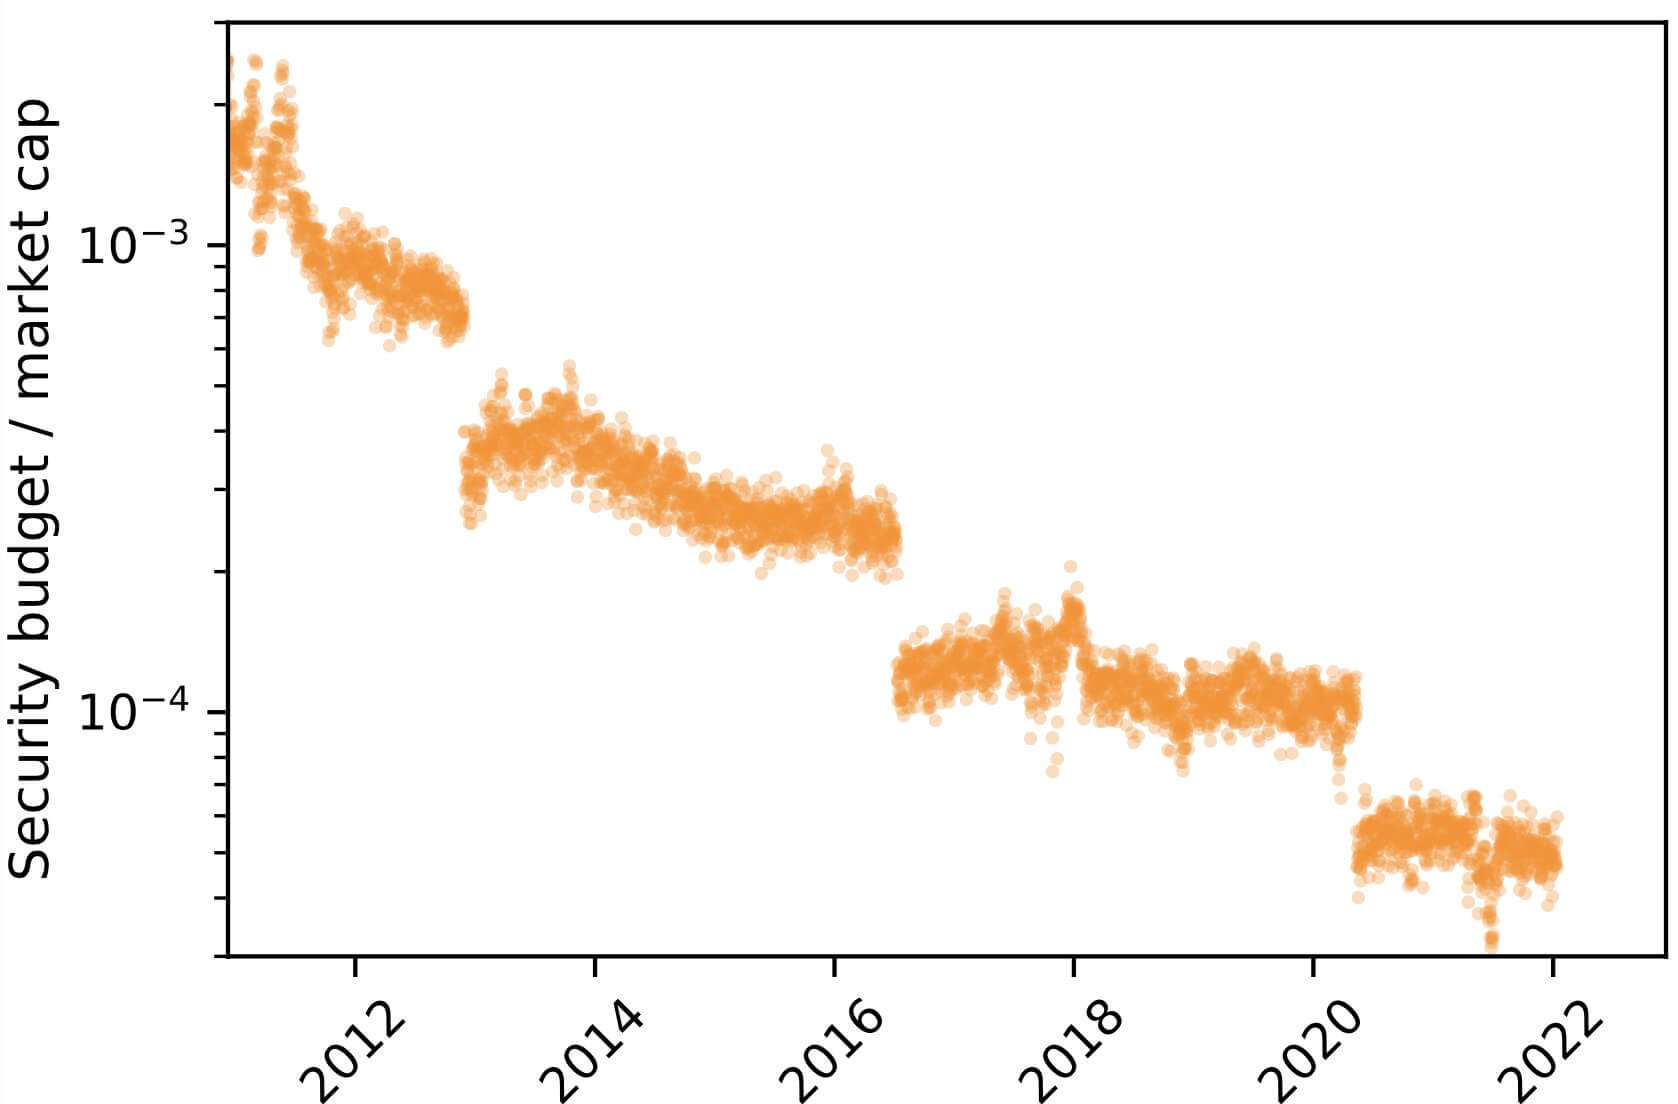 Bitcoin security budget relative to market cap (CoinMetrics)